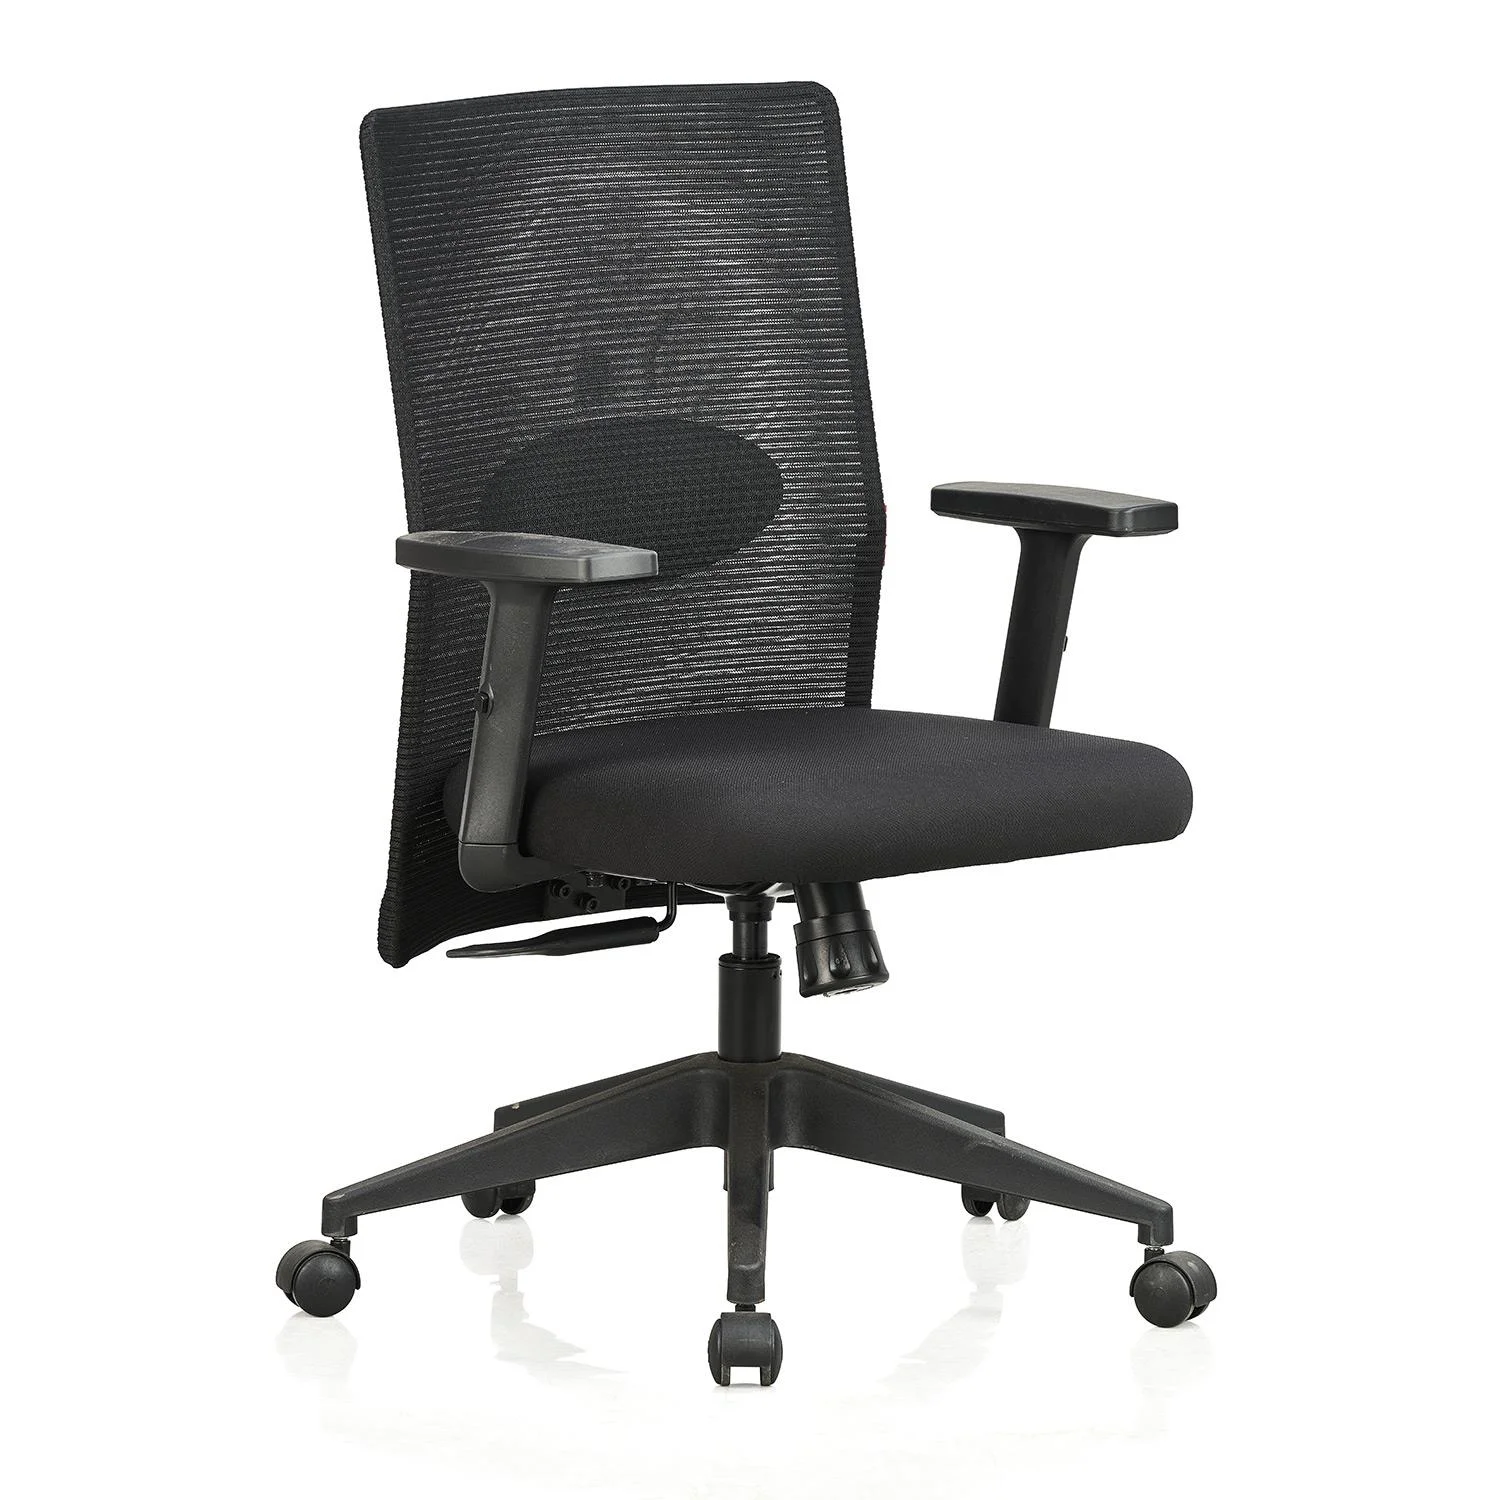 Contact Medium Back Chair